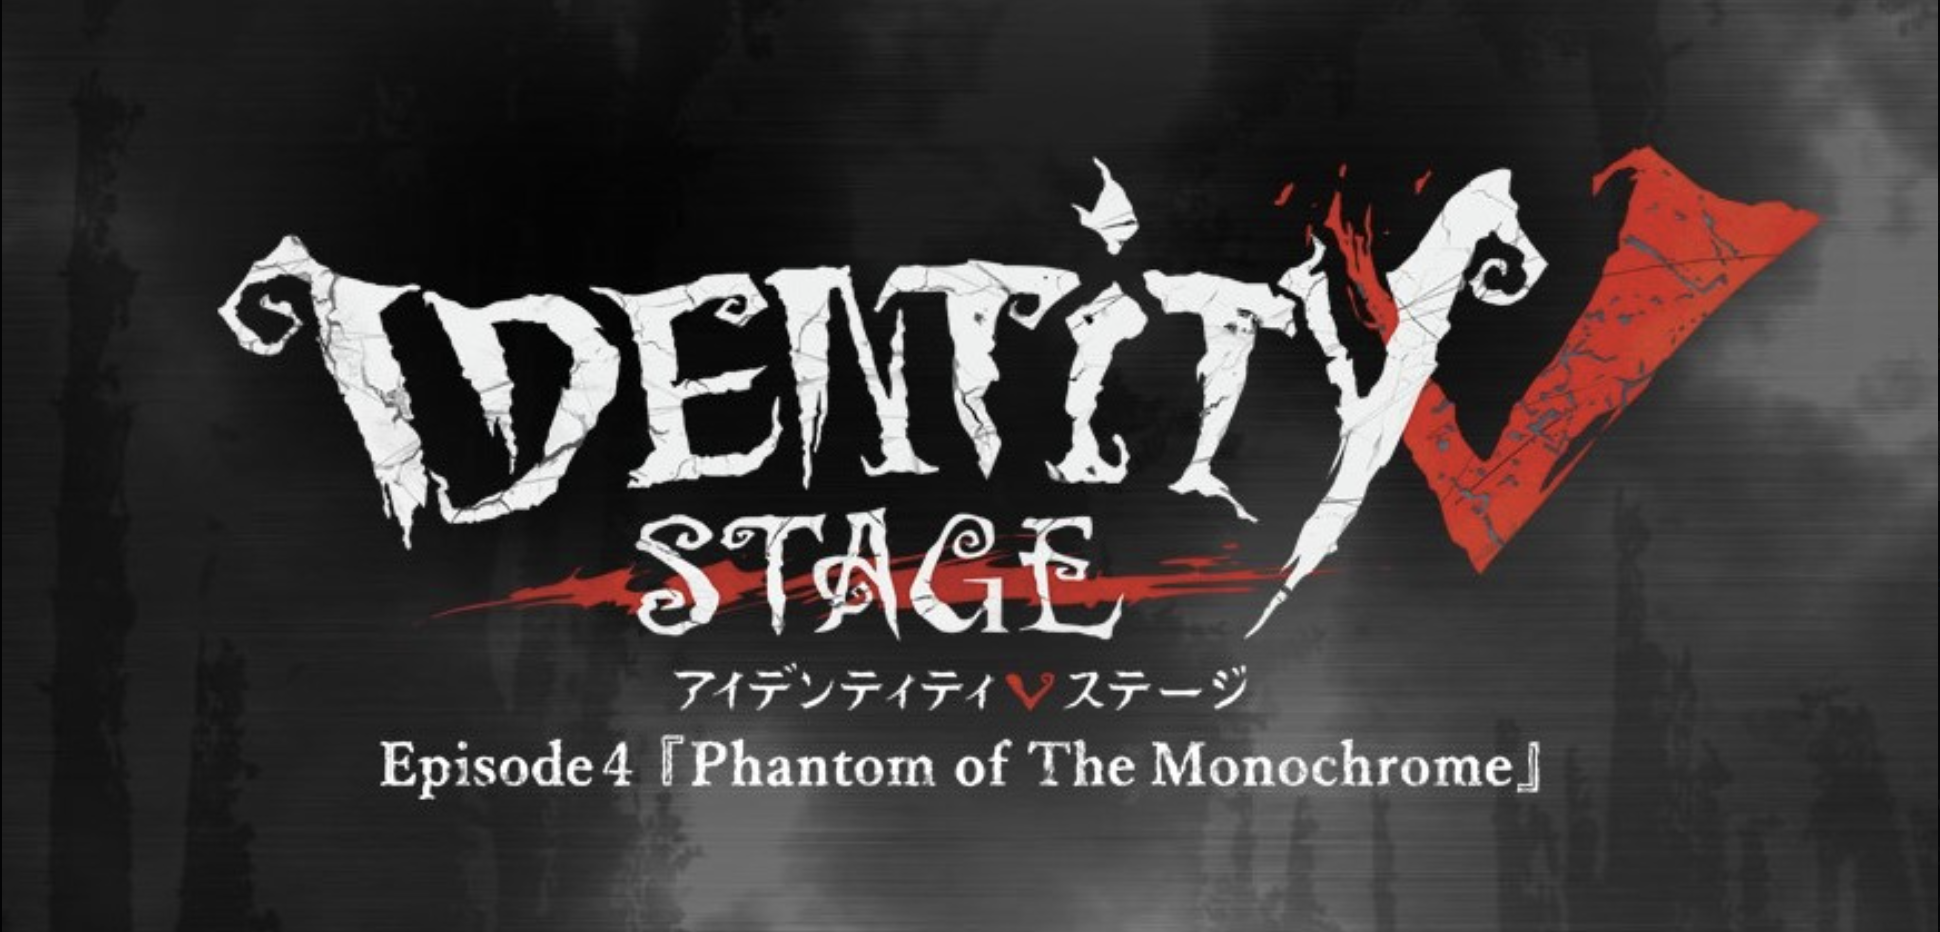 【運営・舞台演出・映像製作】IdentityV STAGE Episode4『Phantom of The Monochrome』